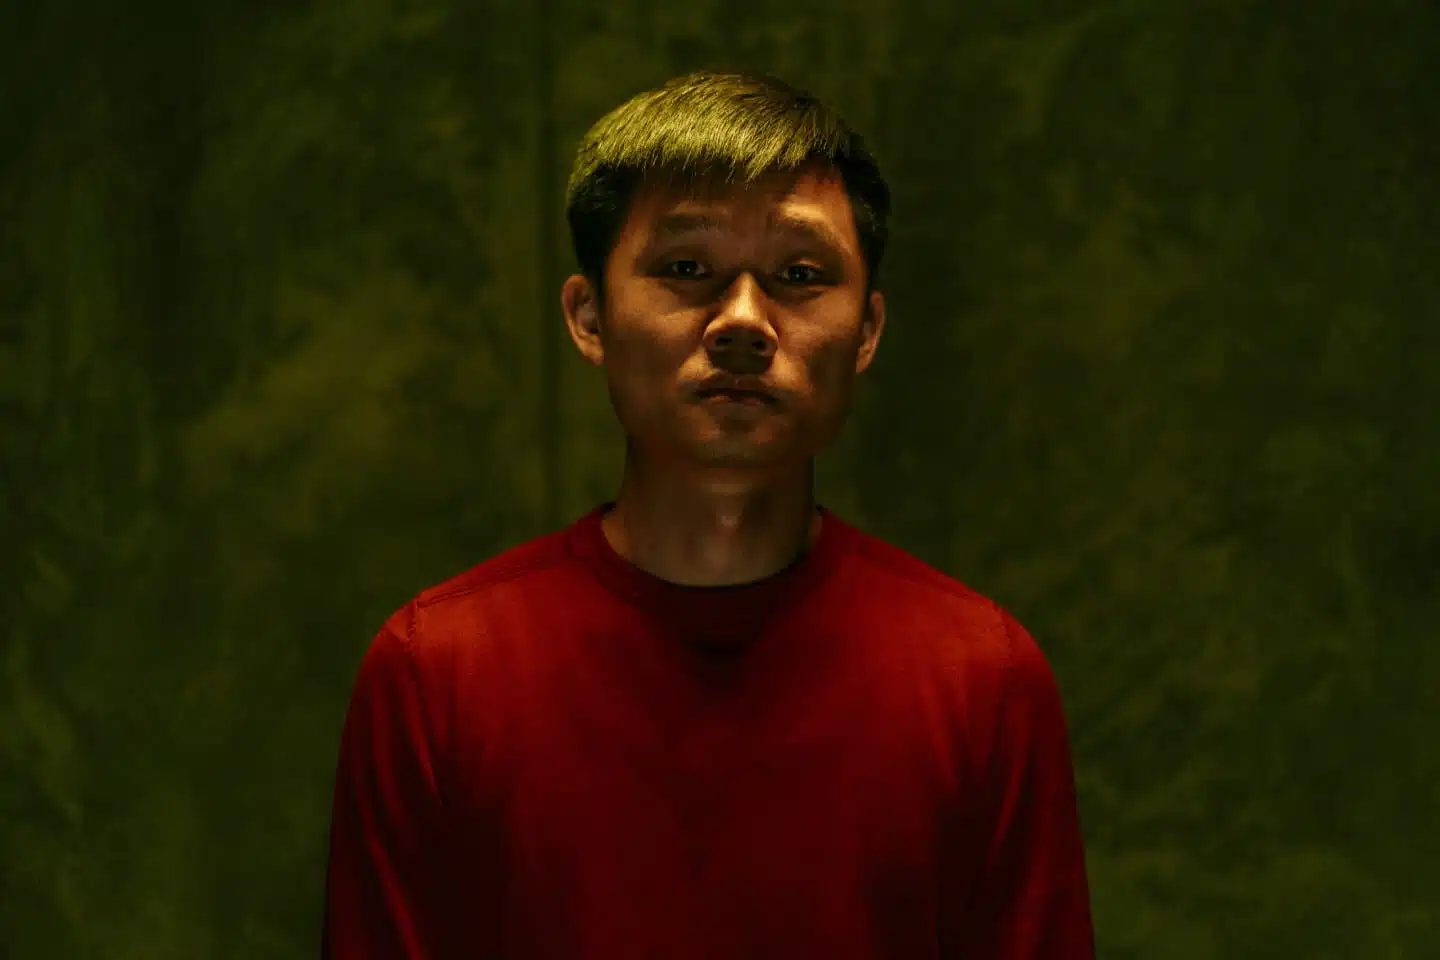 Sad and tired Asian man dark portrait